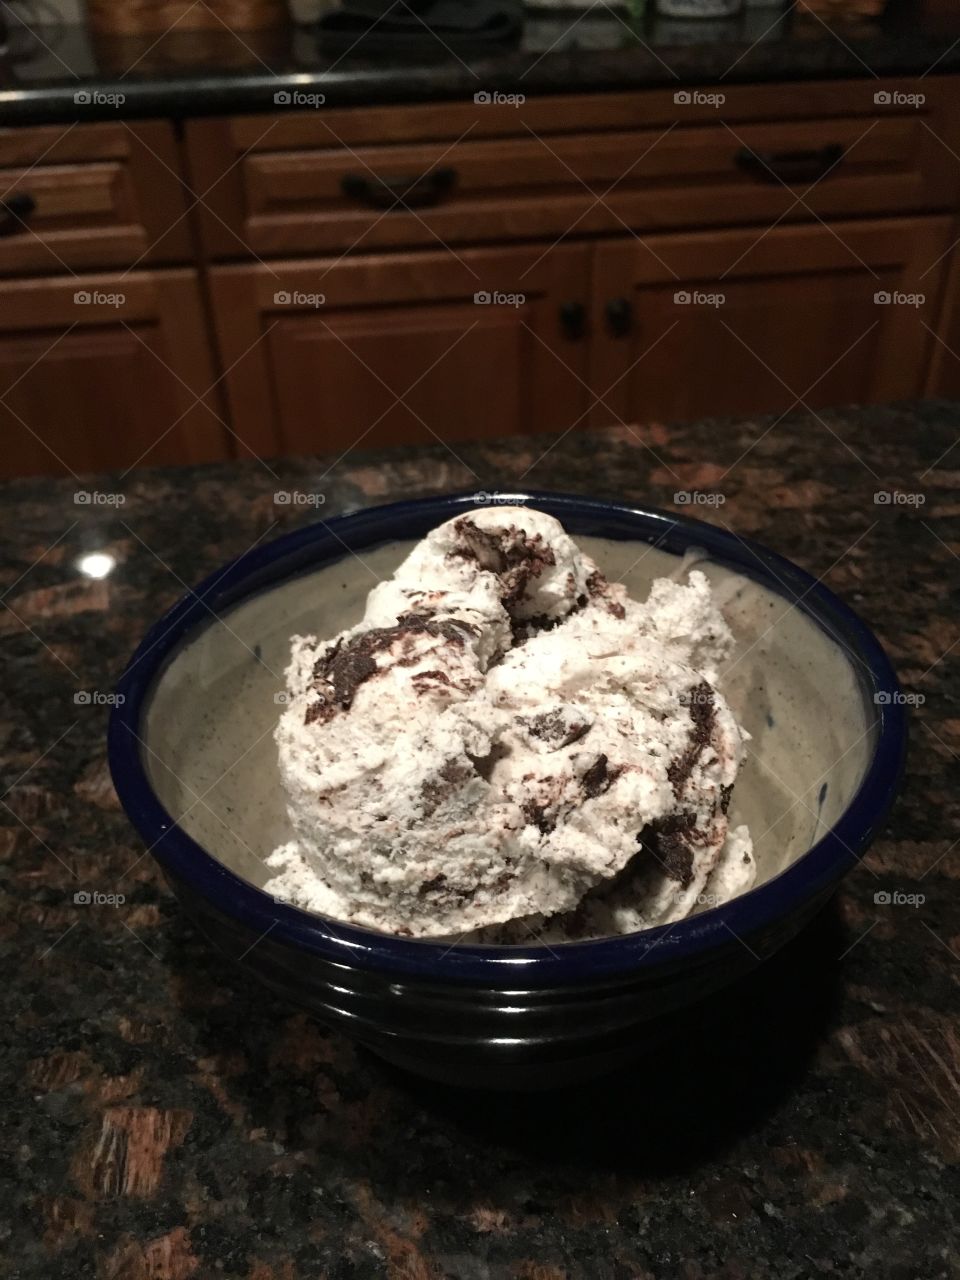 Oreo ice cream in a hand made bowl